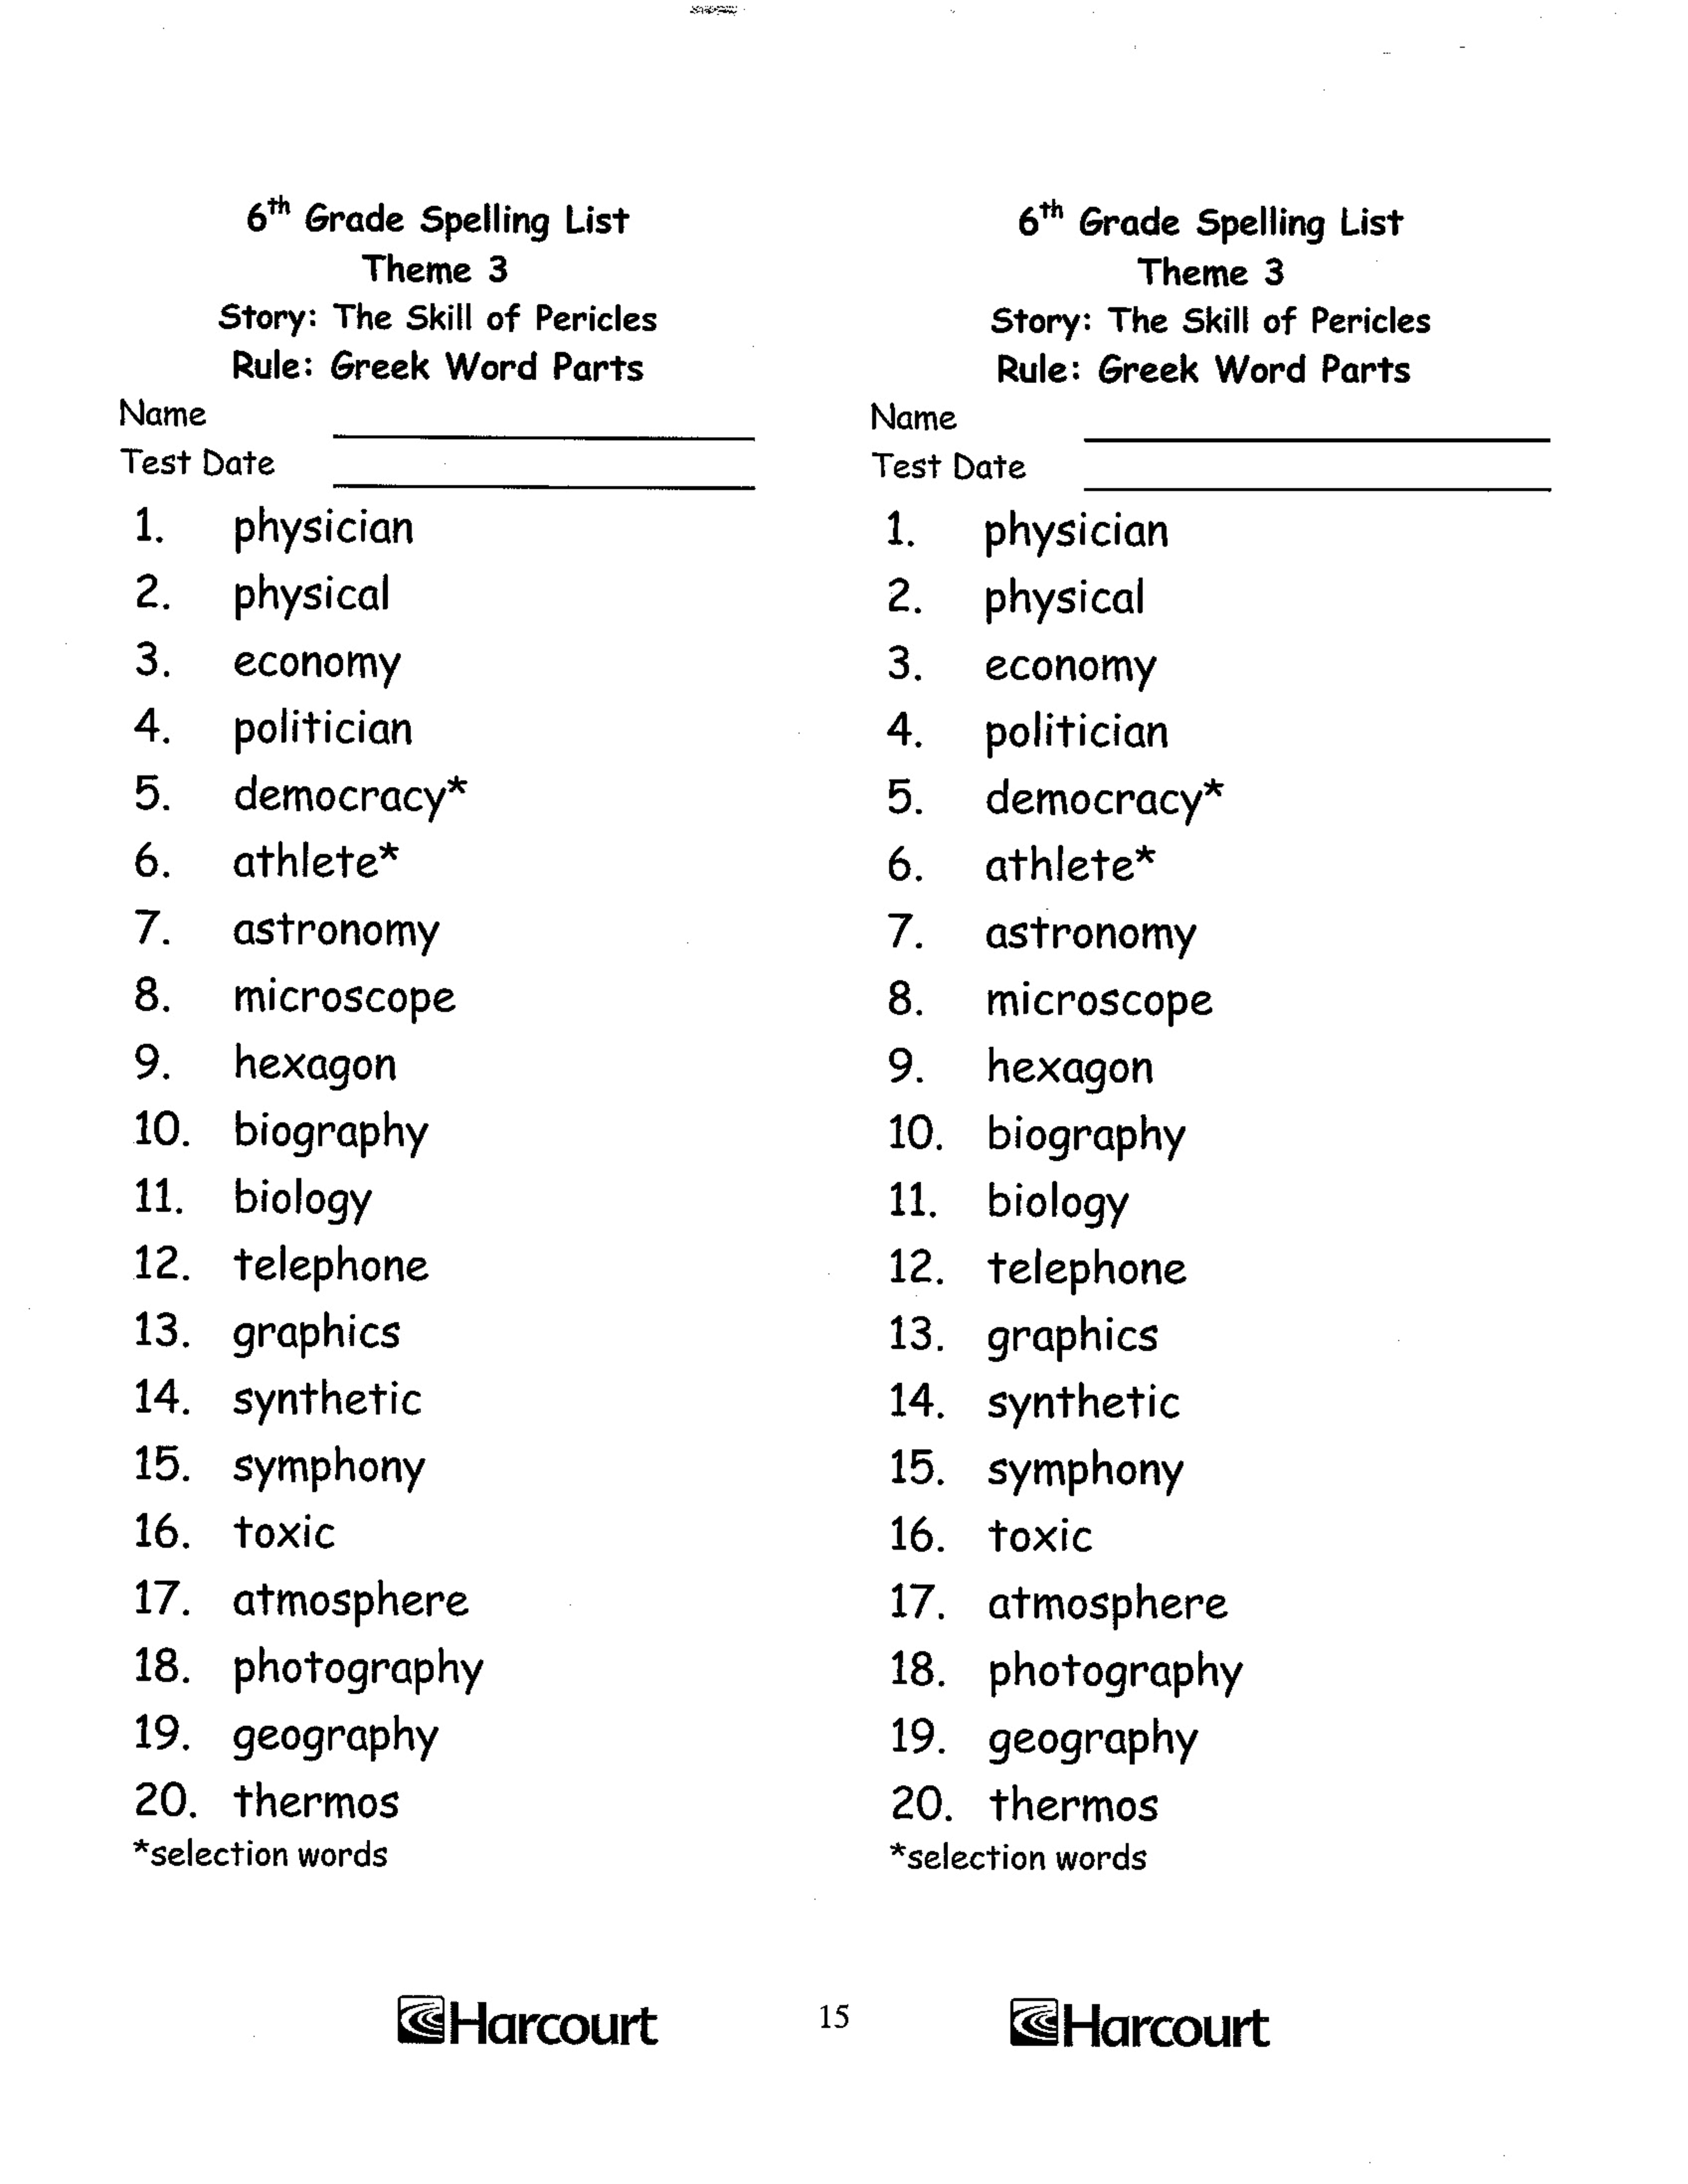 15 Best Images Of 6th Grade Spelling Words Worksheets 